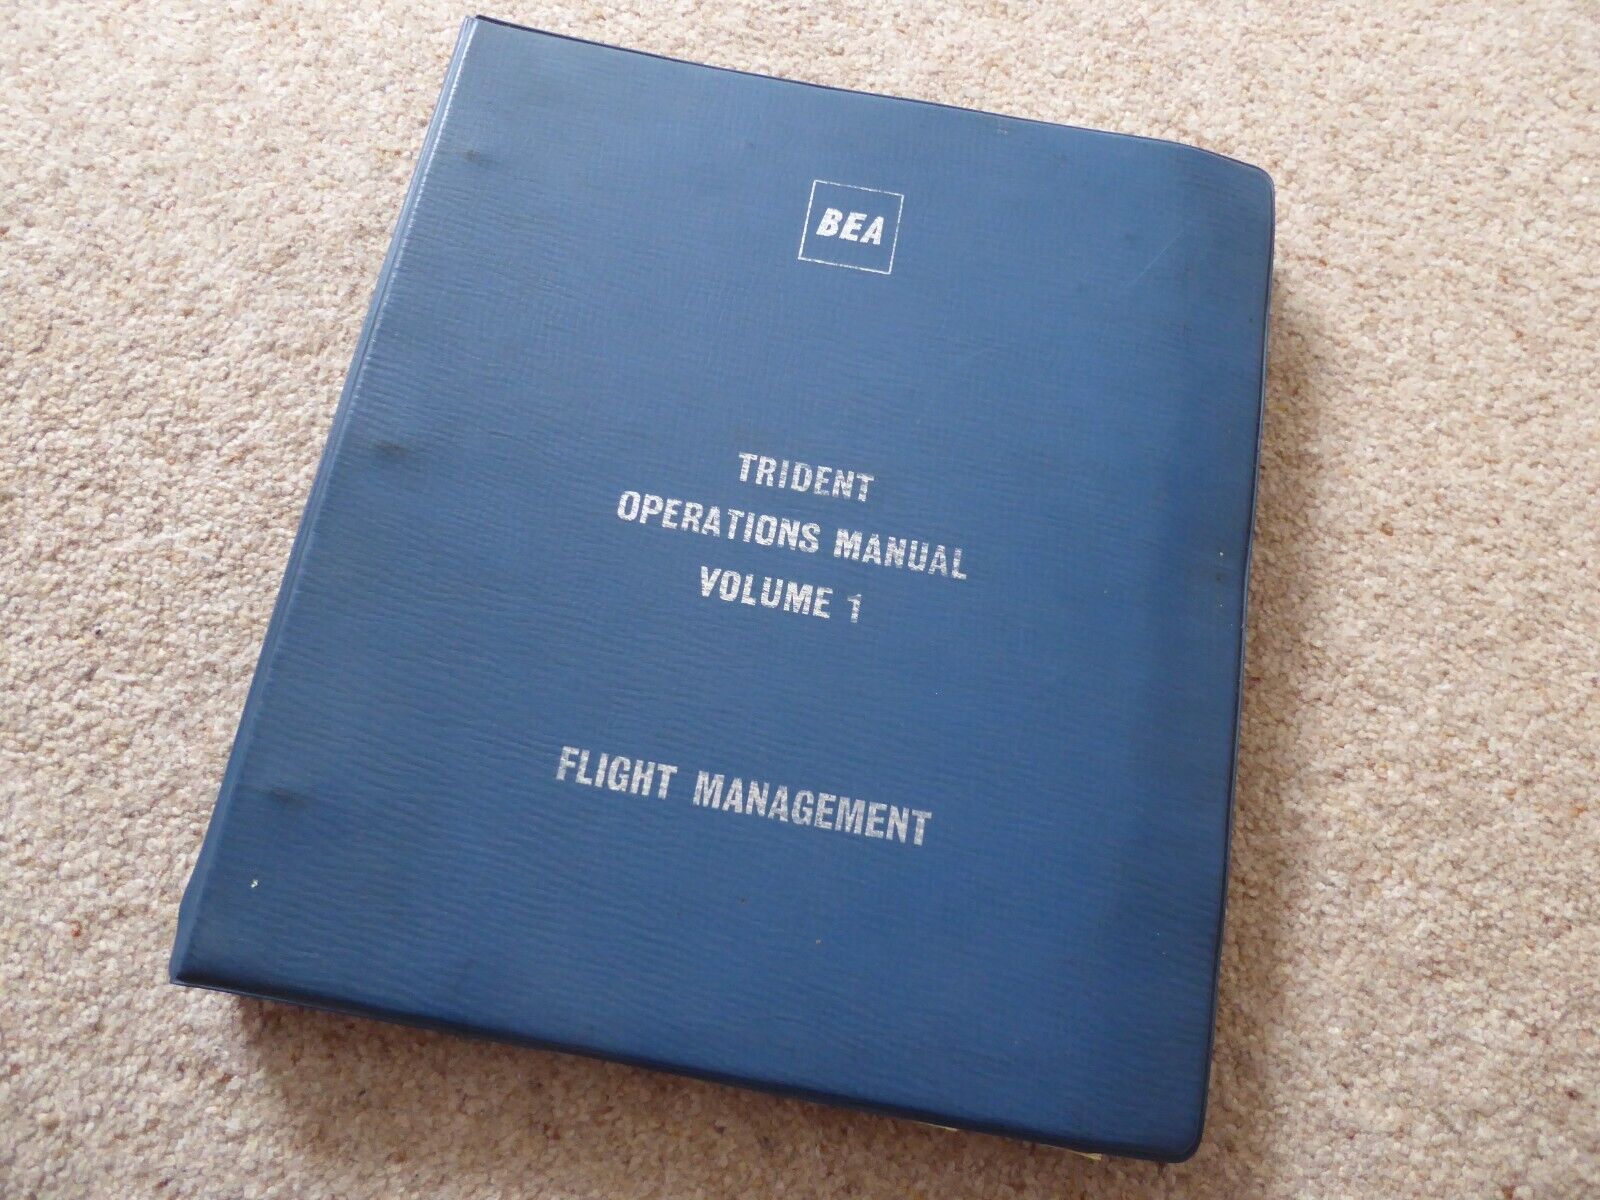 BEA Trident 1 Operations Manual Volume 1 - Flight Management - V. Good Condition